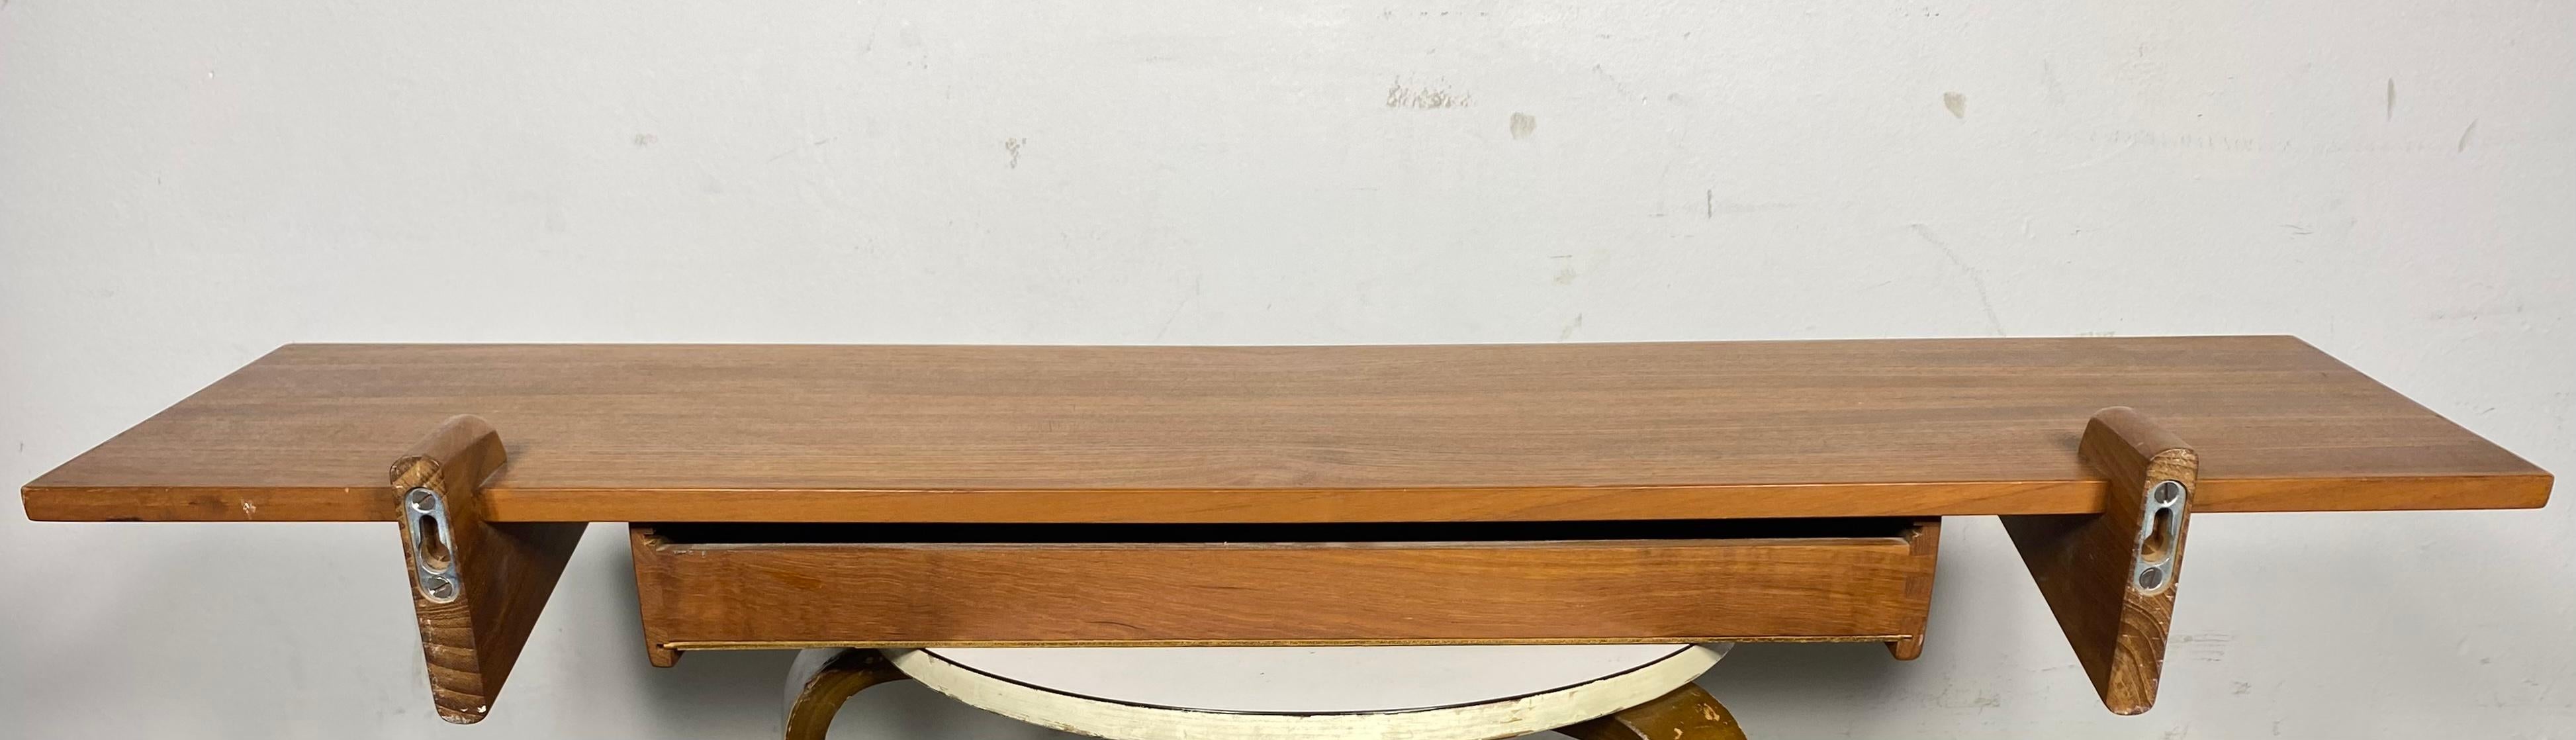 Rare Floating Teak Shelf by Aksel Kjersgaard / 1960's Mid Century Danish Design.
Incredibly lovely and rare teak drawer shelf by Aksel Kjersgaard. Made in Odder Denmark c. 1960's. Quintessential Danish design utilizing a unique wall mounted shelf